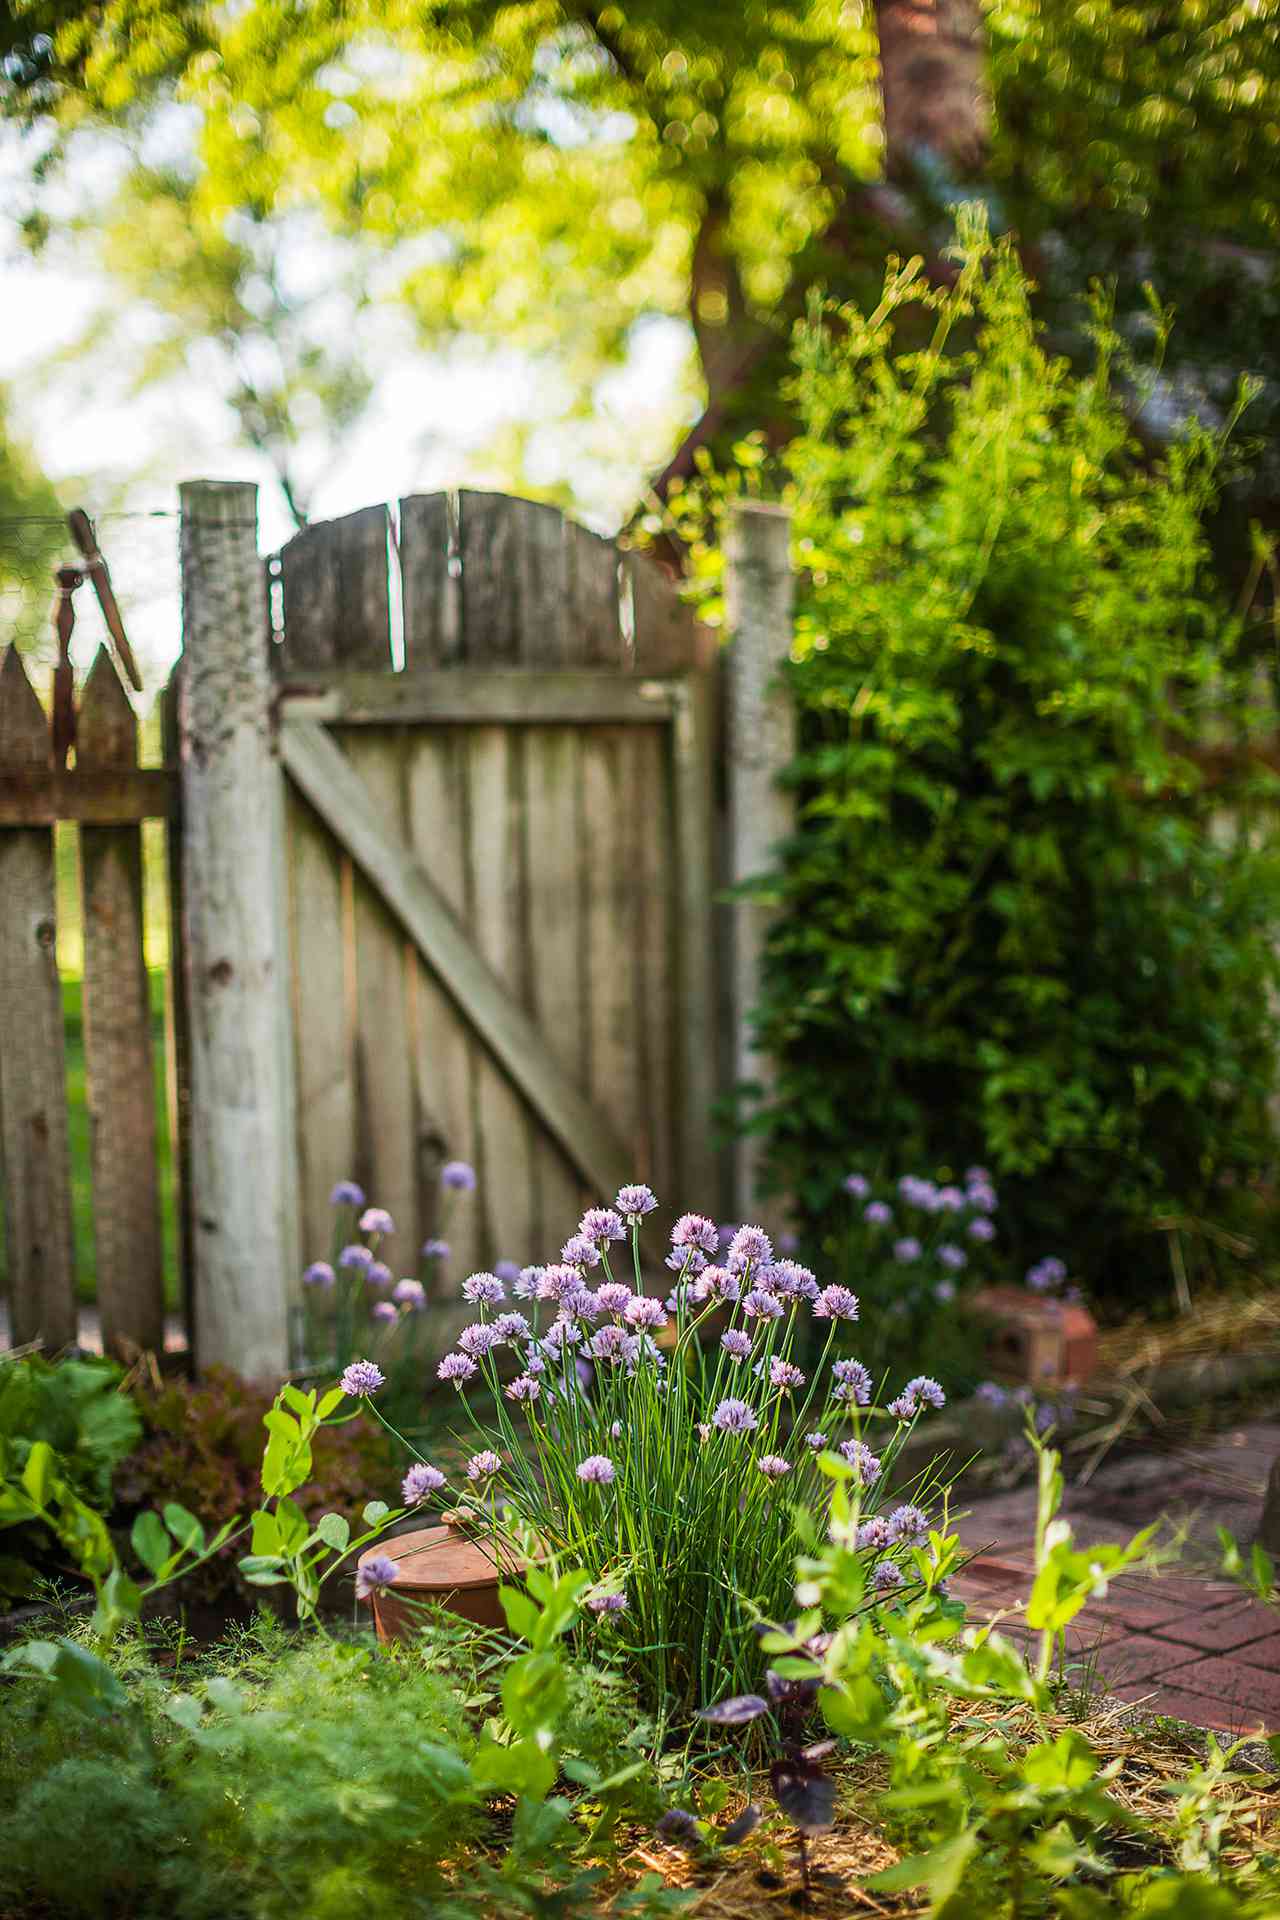 fenced in garden